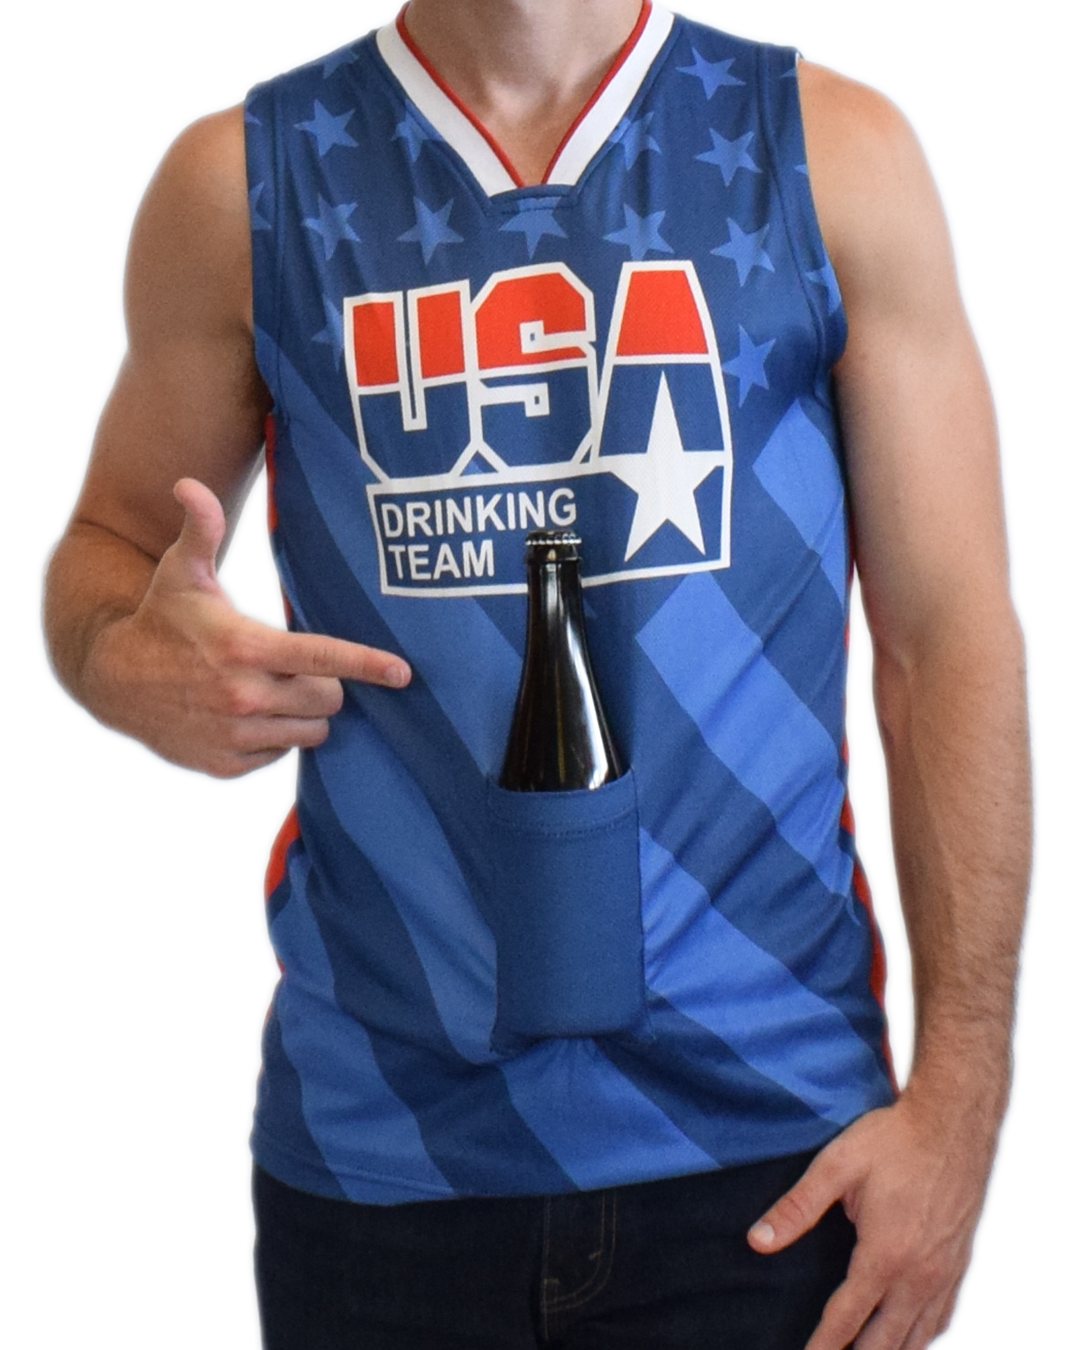 Texas Drinking Team Basketball Jersey - USA Drinking Team